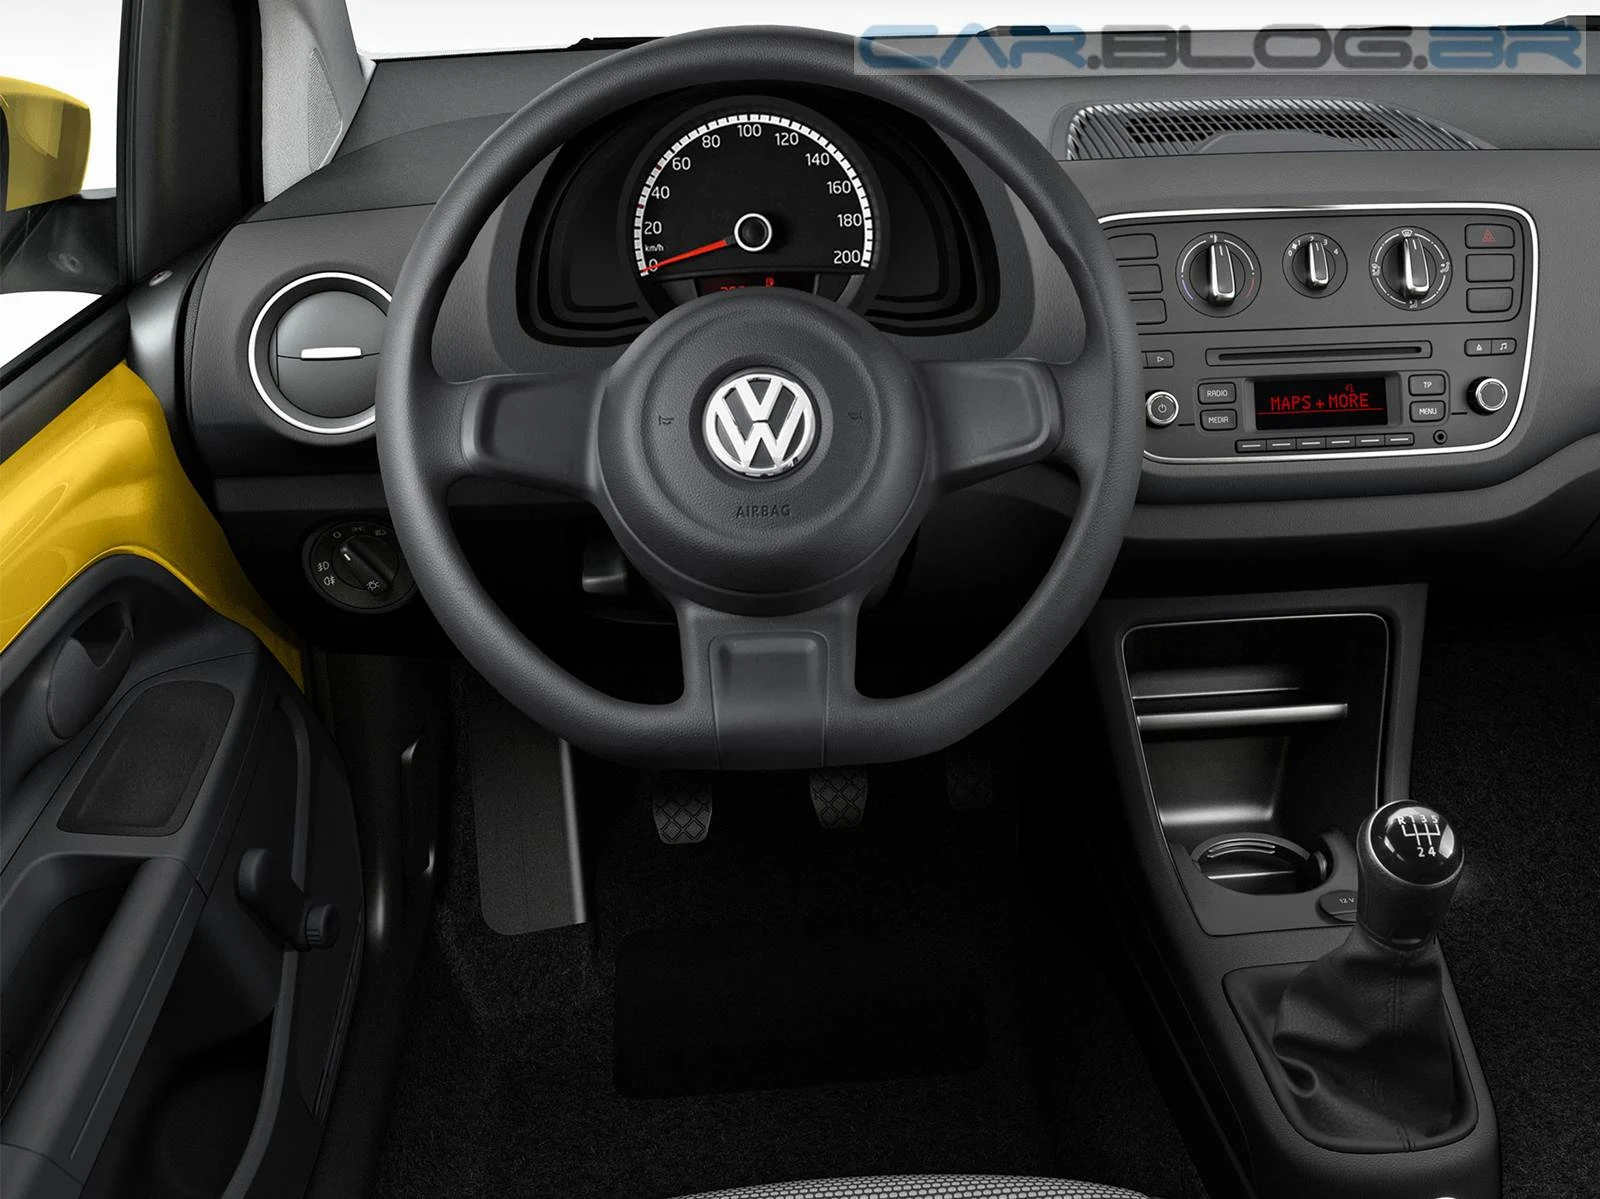 Volkswagen up! - versão de entrada - Take-up! - interior